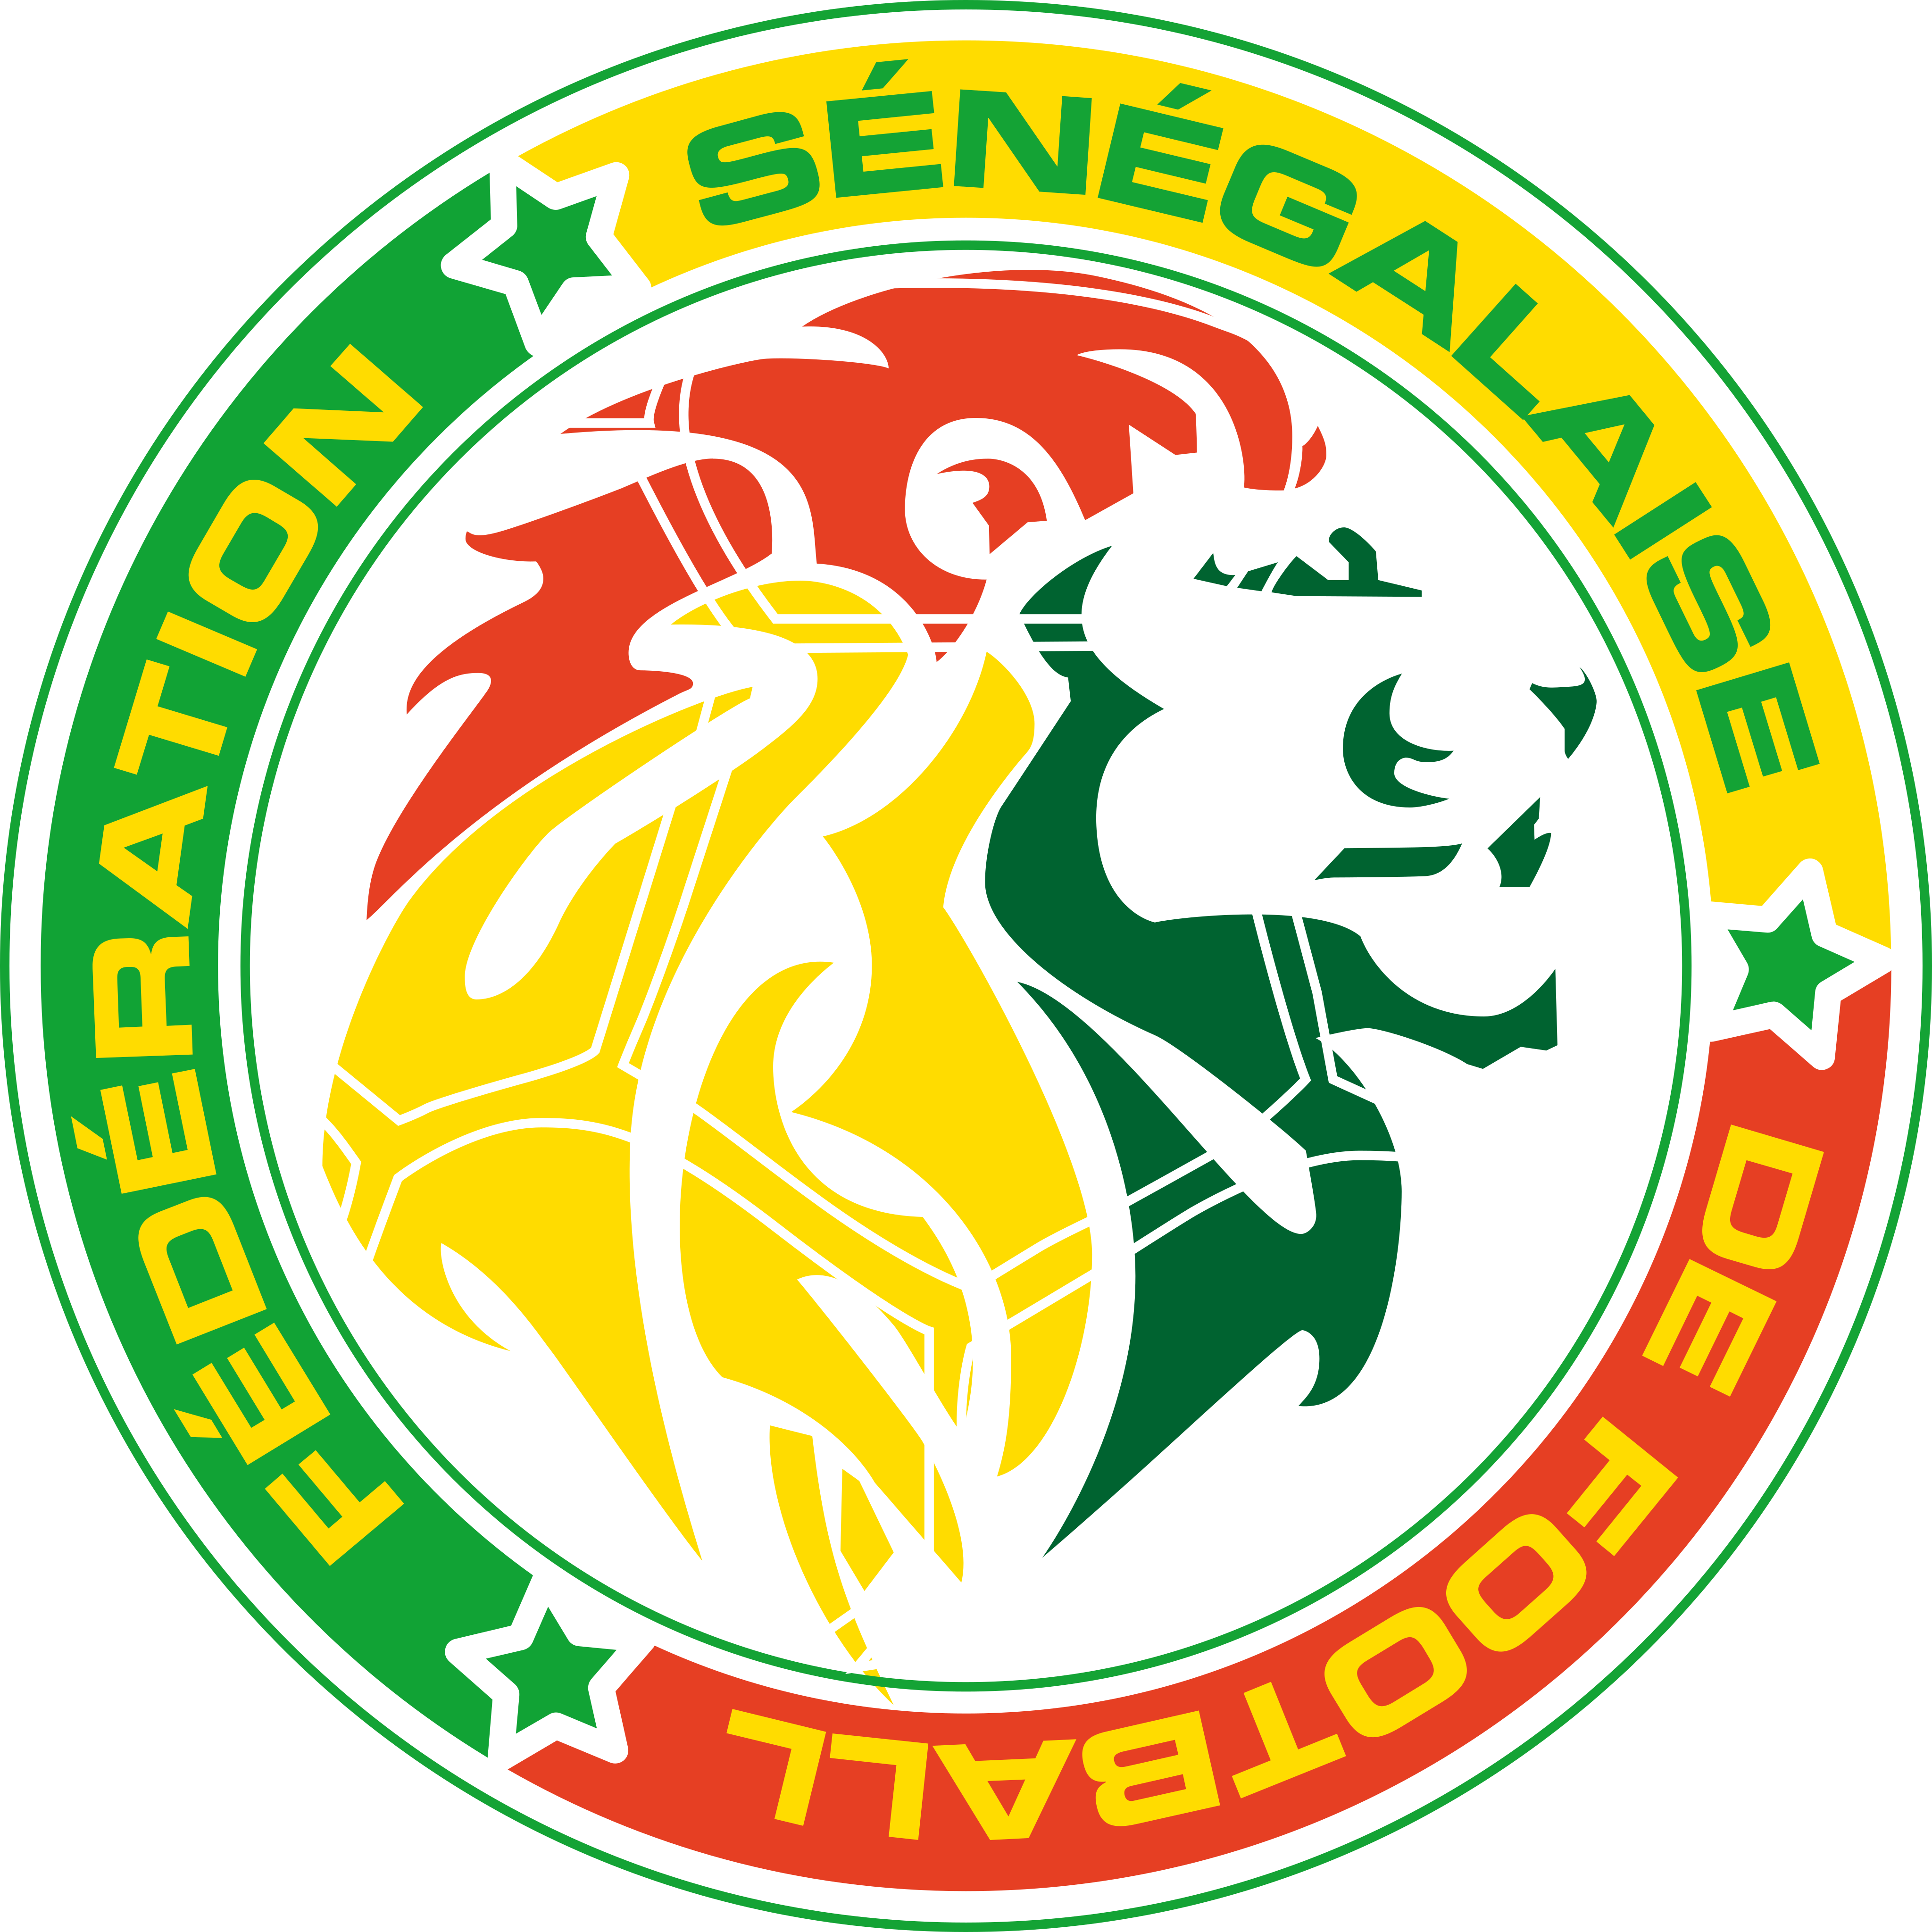 fsf senegal national football team logo - FSF Logo - Équipe du Sénégal de Football Logo